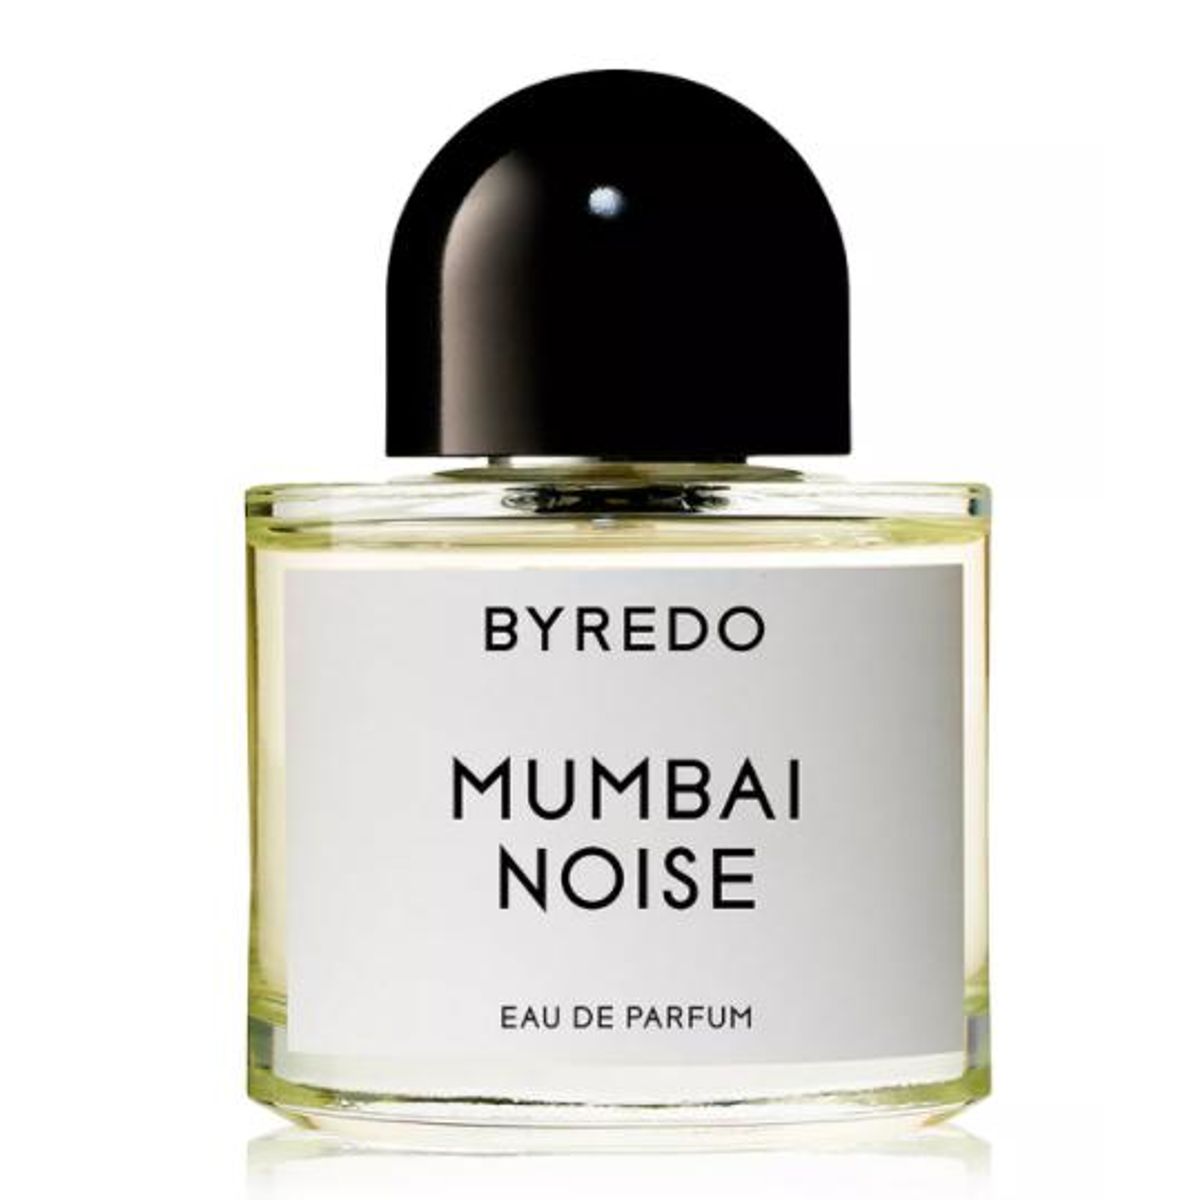 byredo mumbai noise eau de parfum